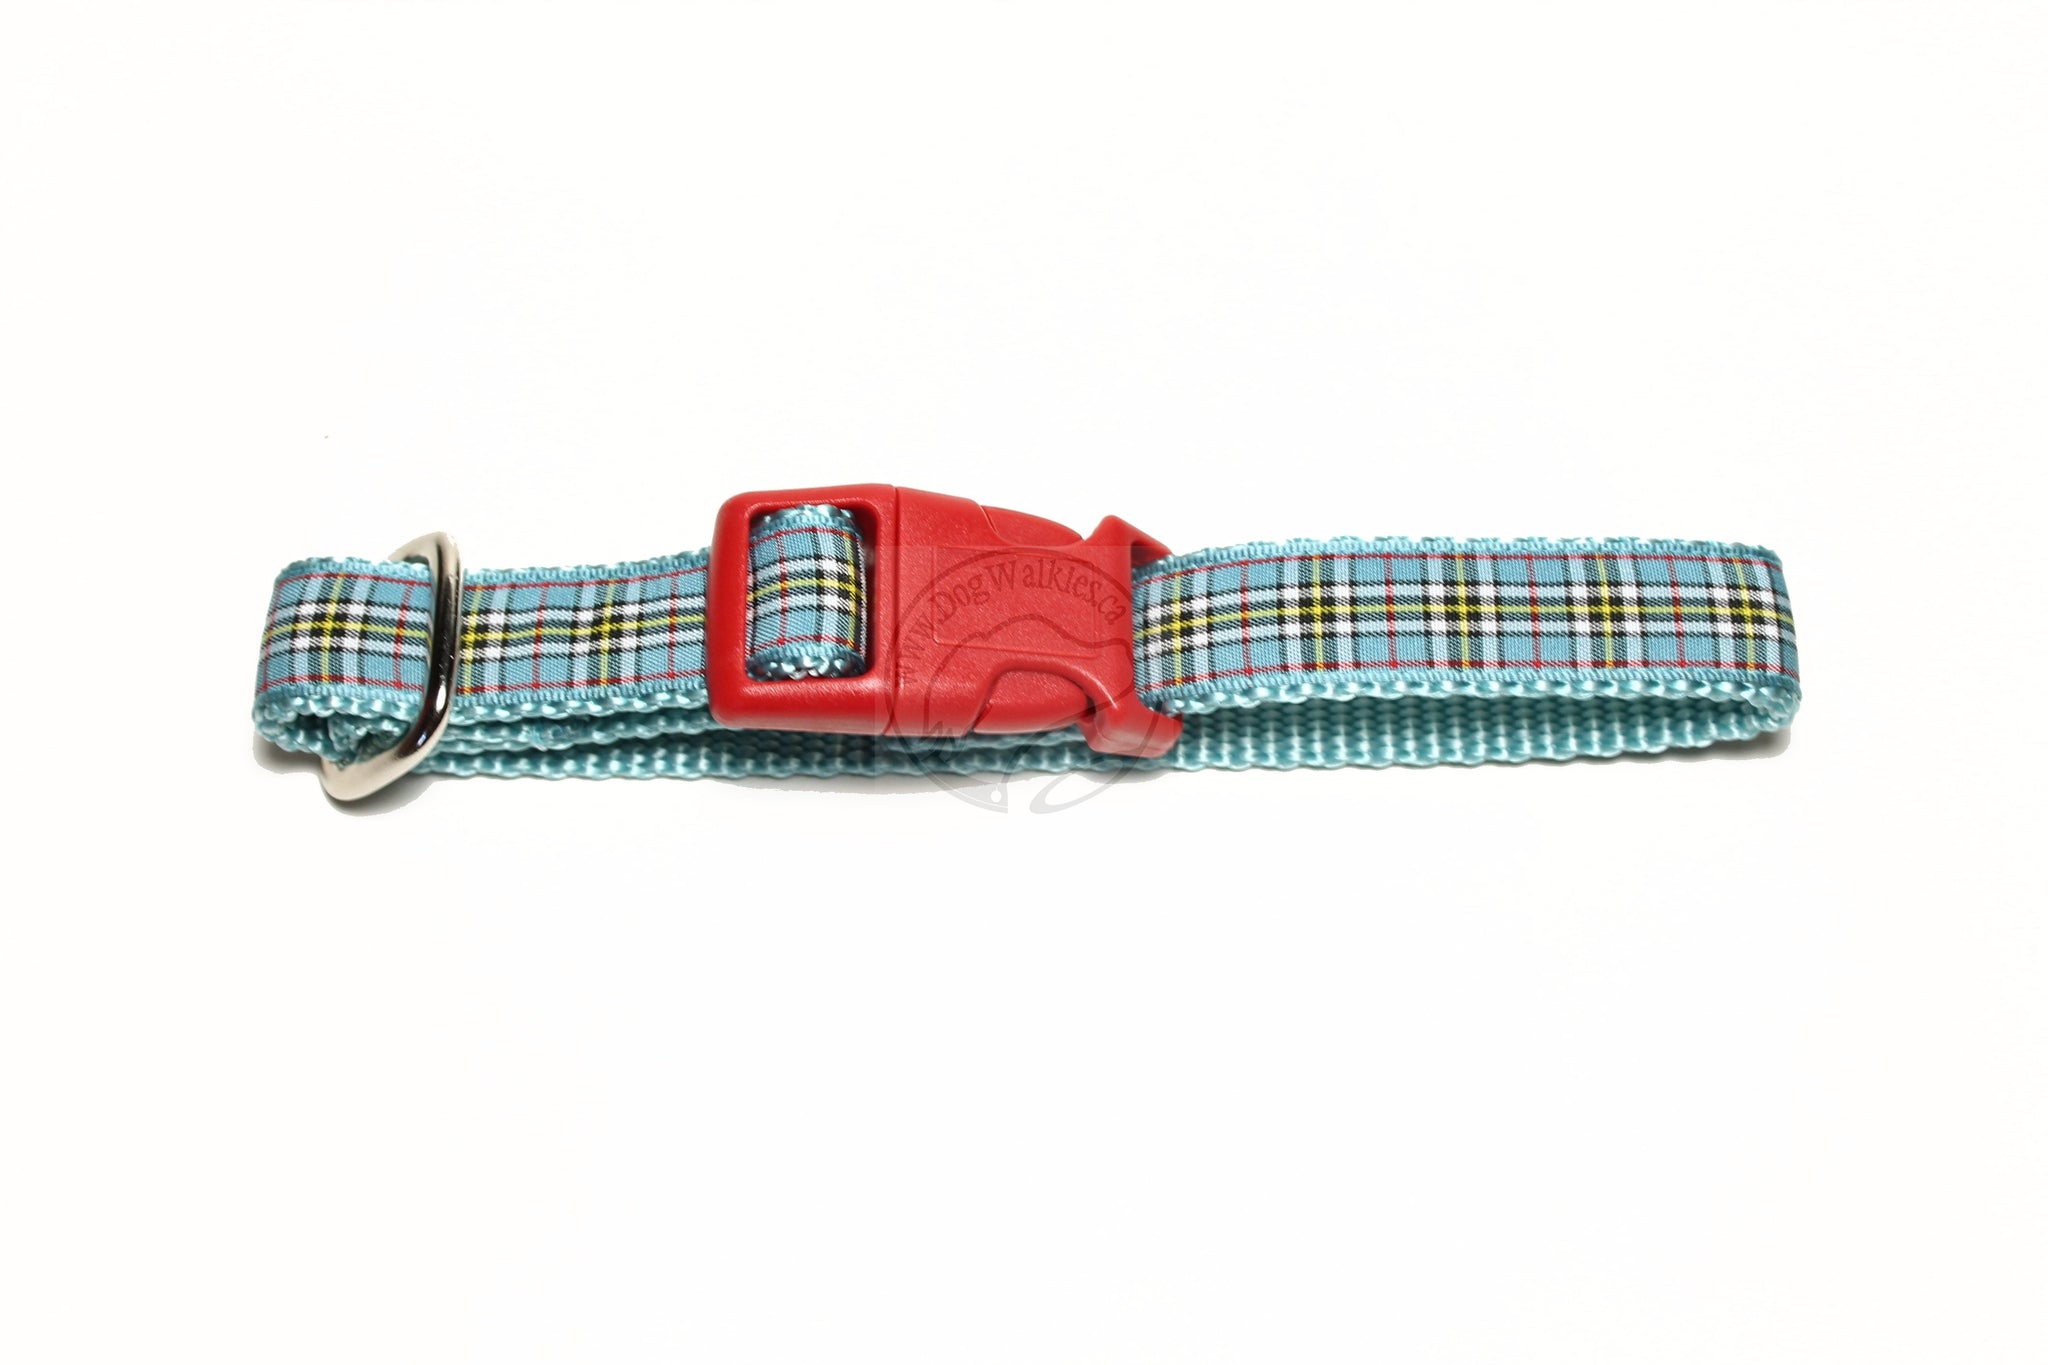 Thompson Clan tartan - dog collar